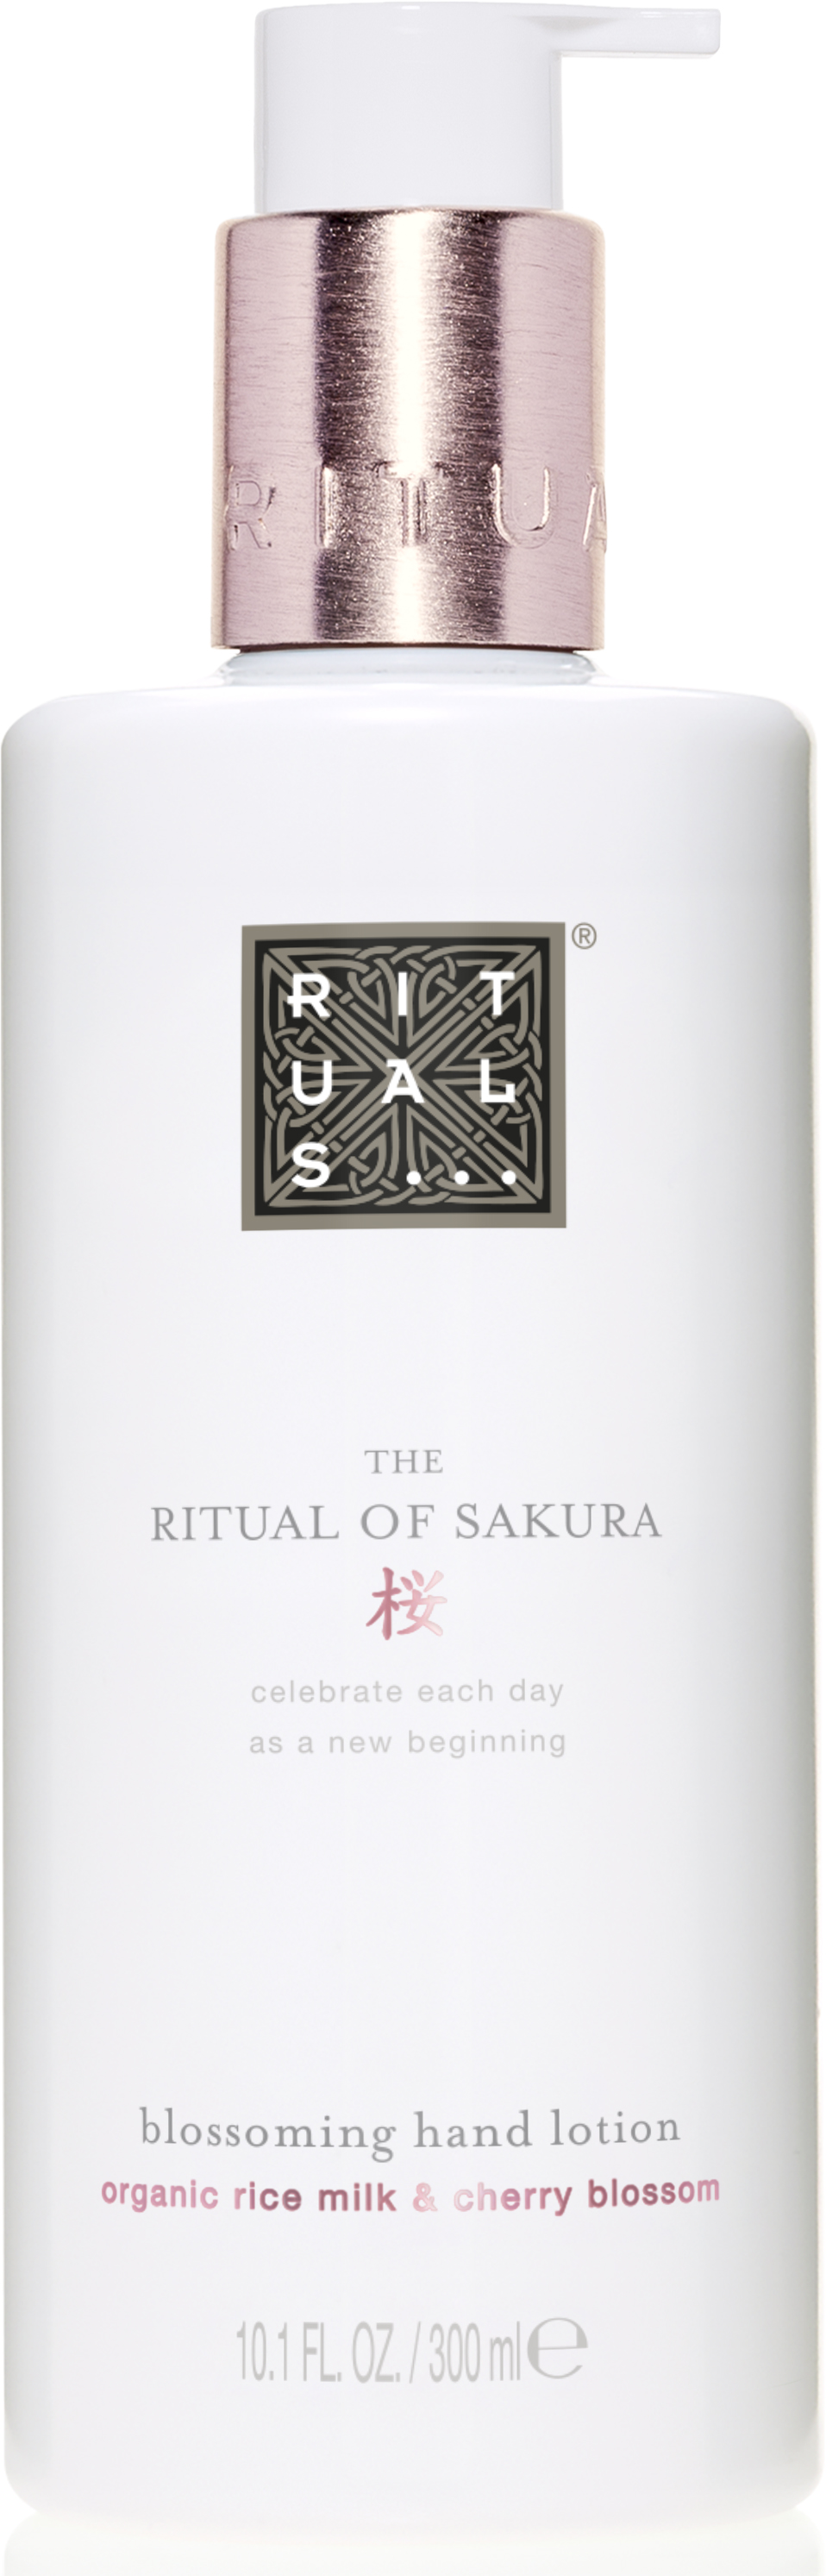 The Ritual of Sakura Hand Lotion